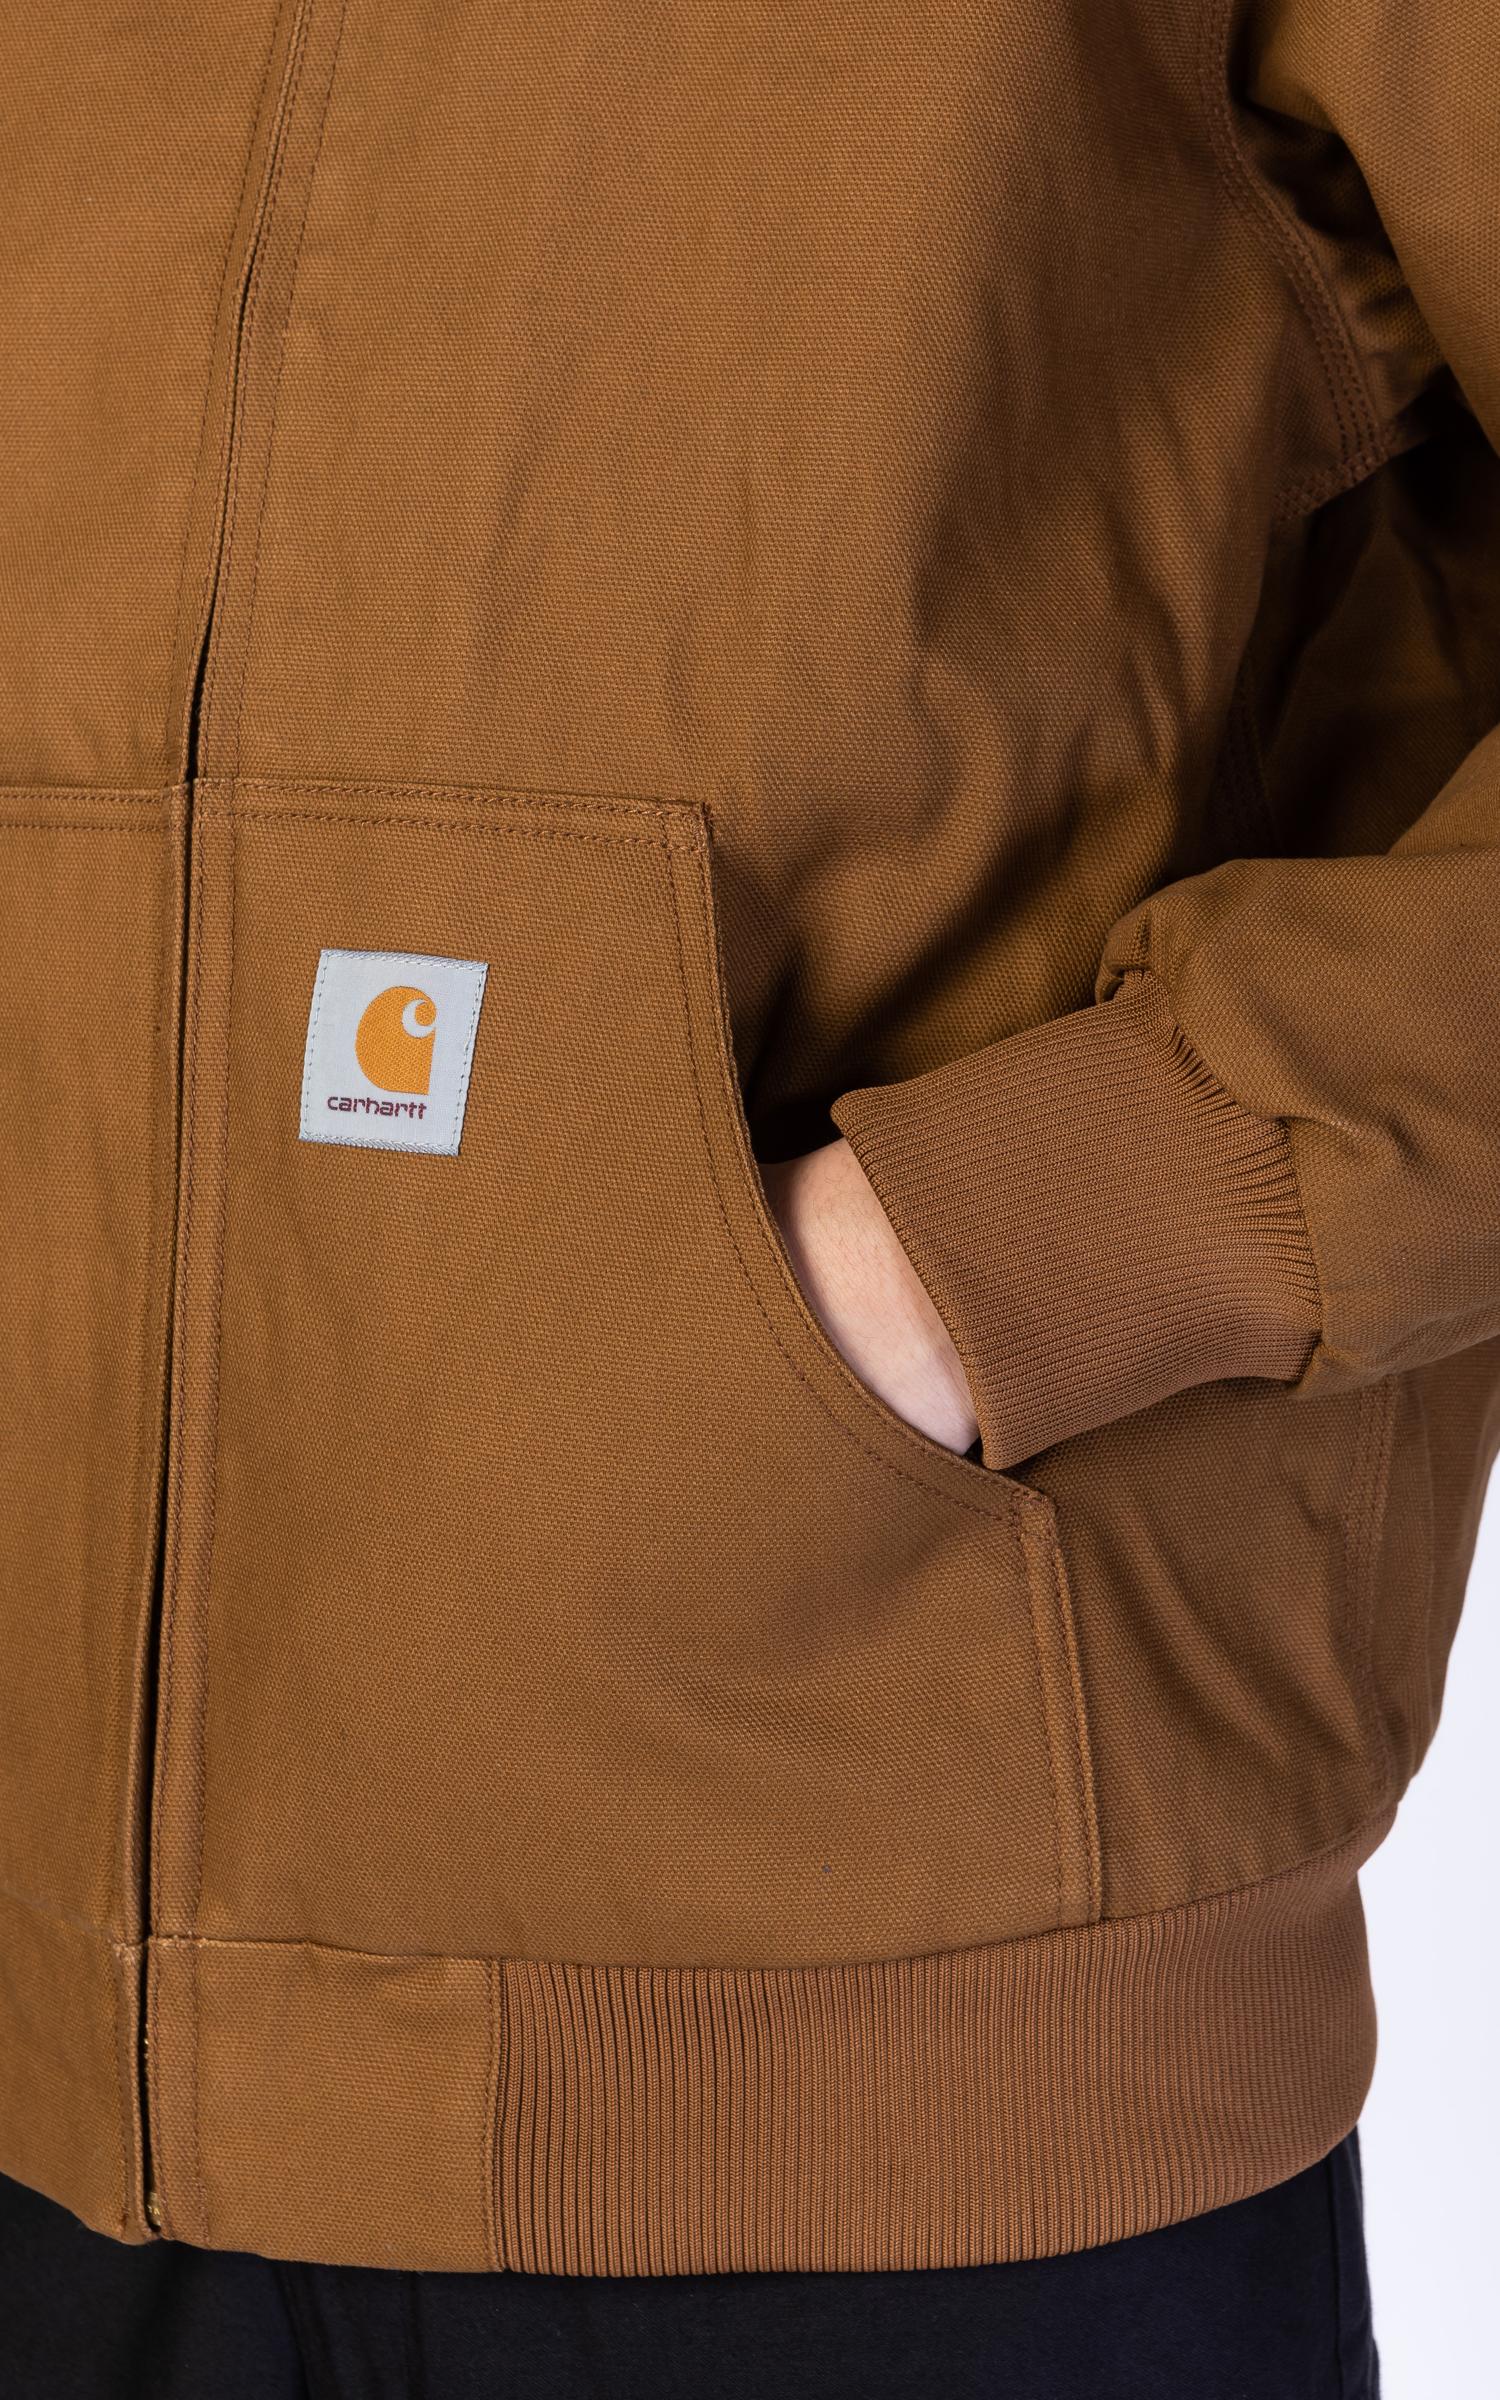 Carhartt WIP Cotton Active Jacket Hamilton Brown Rigid for Men - Lyst